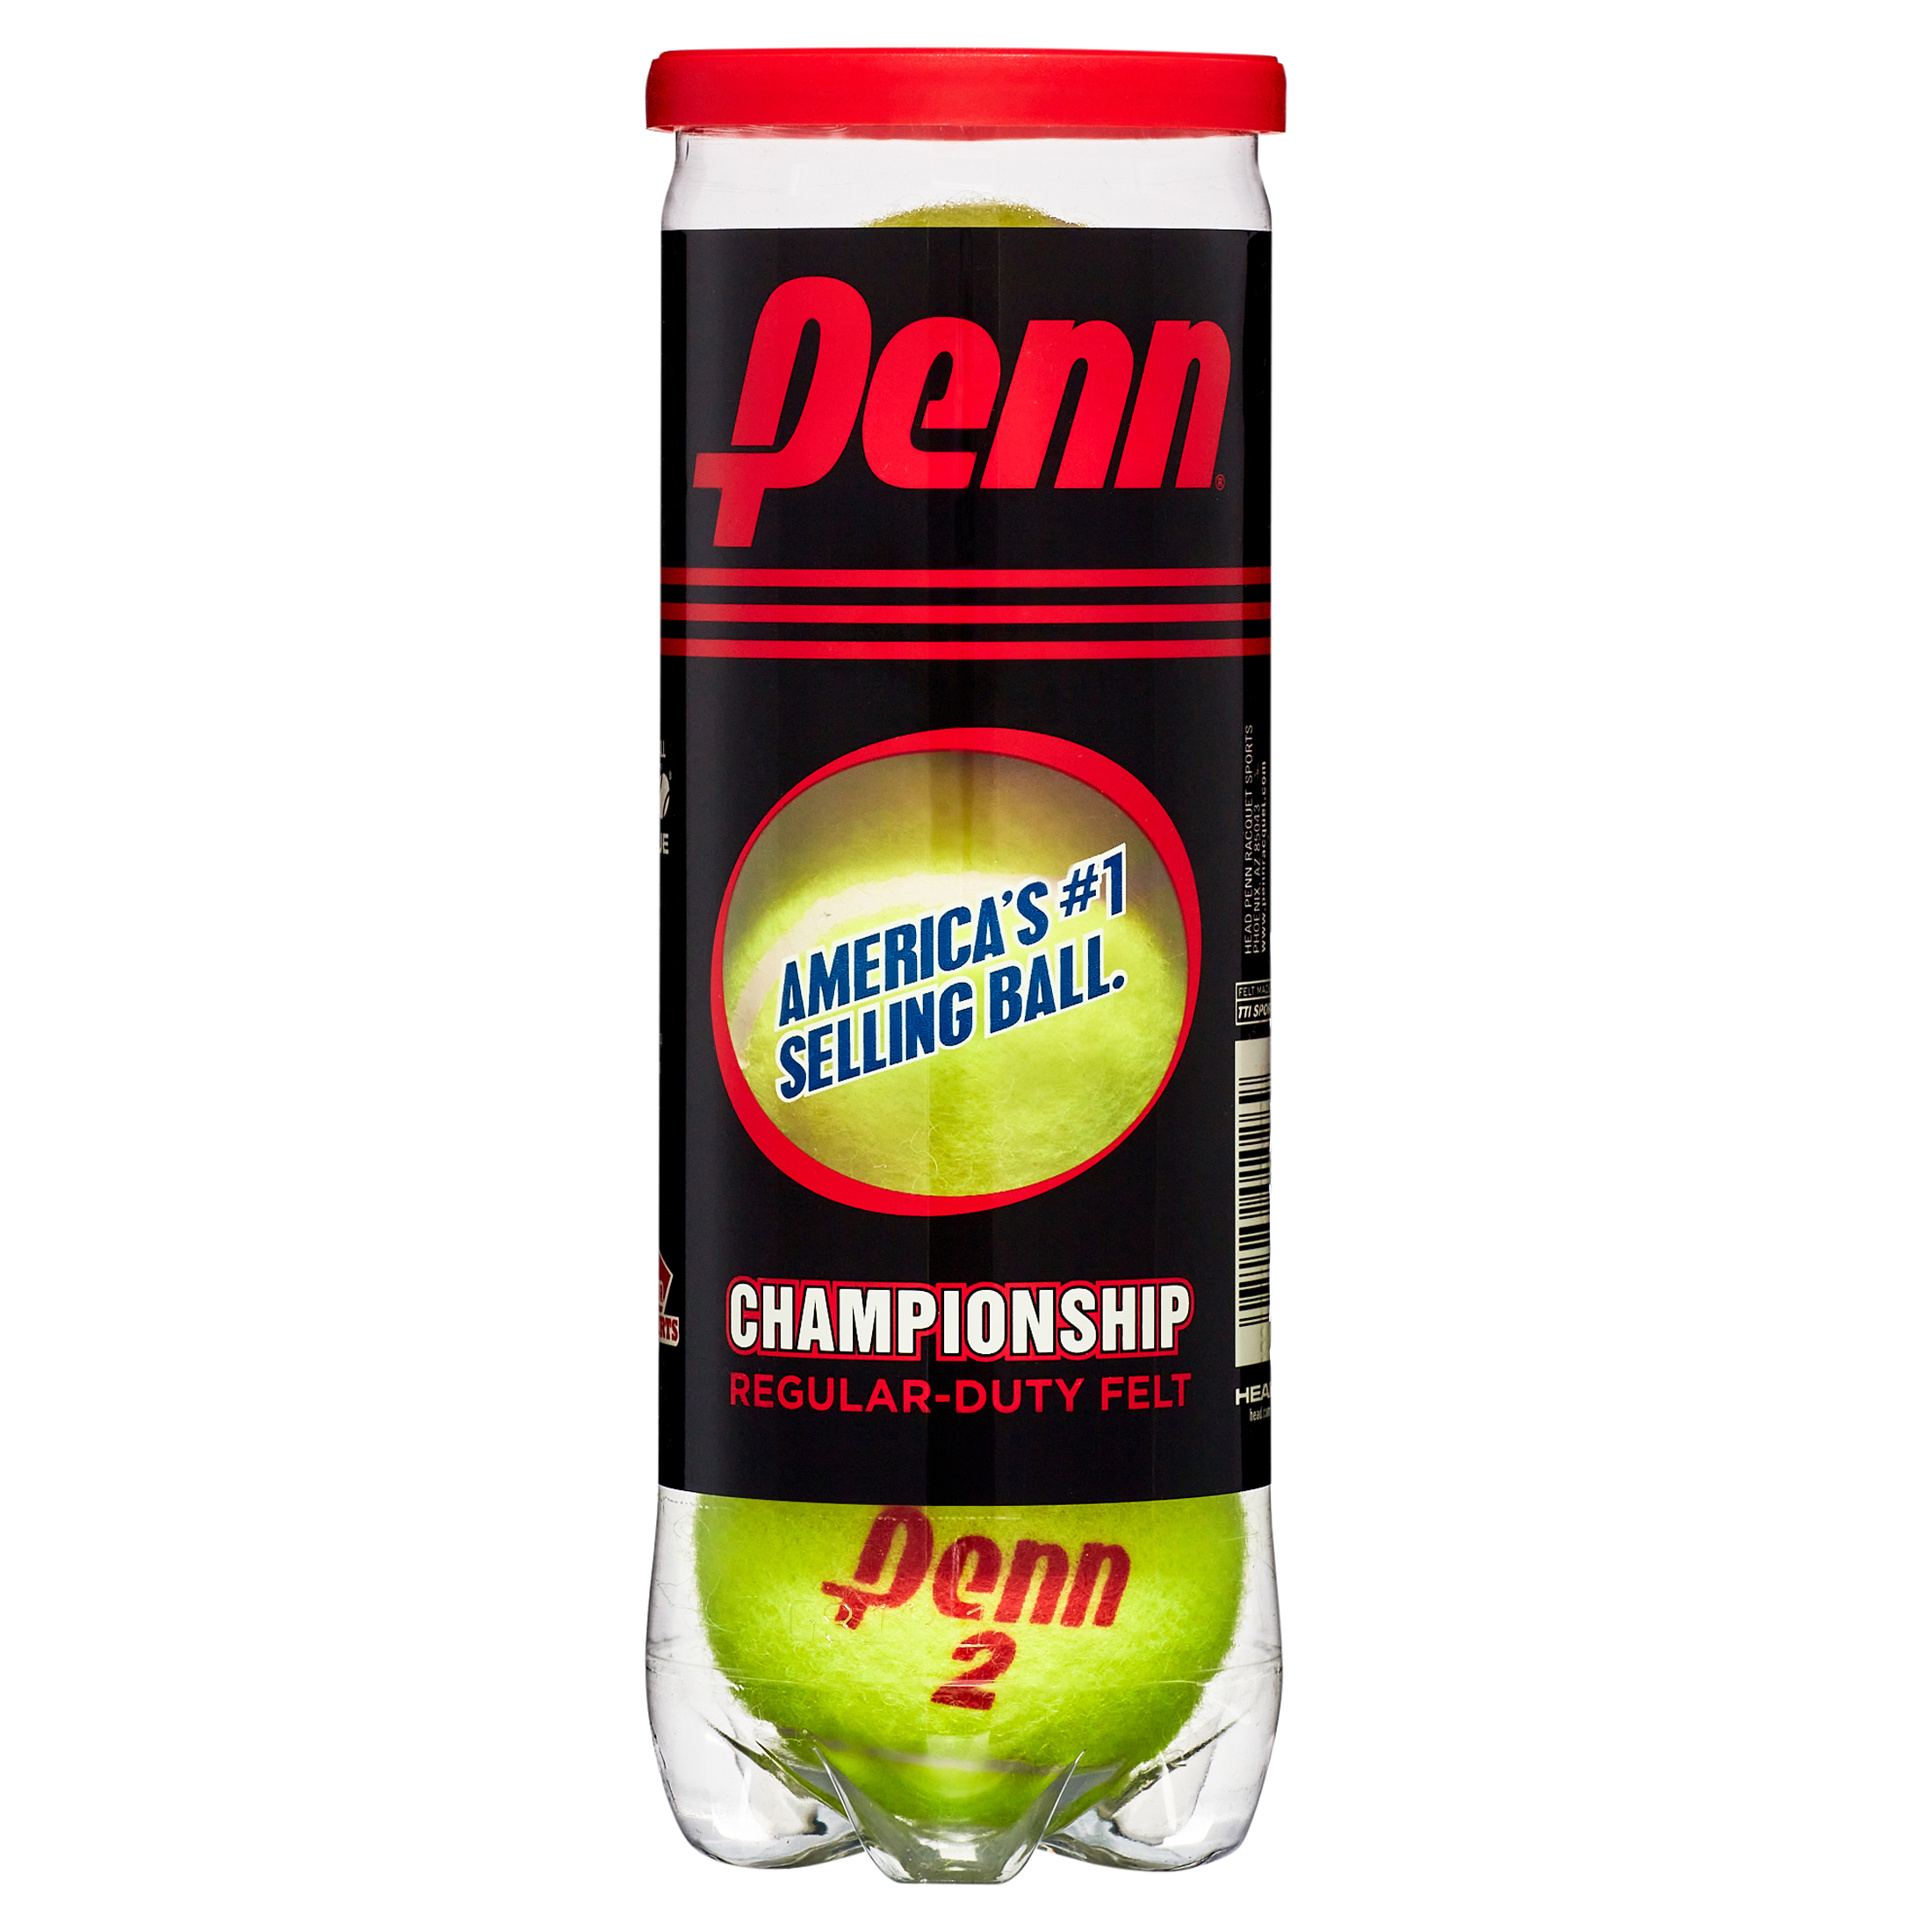 Penn Championship Regular Duty Tennis Balls (1 Can, 3 Balls) - image 1 of 11